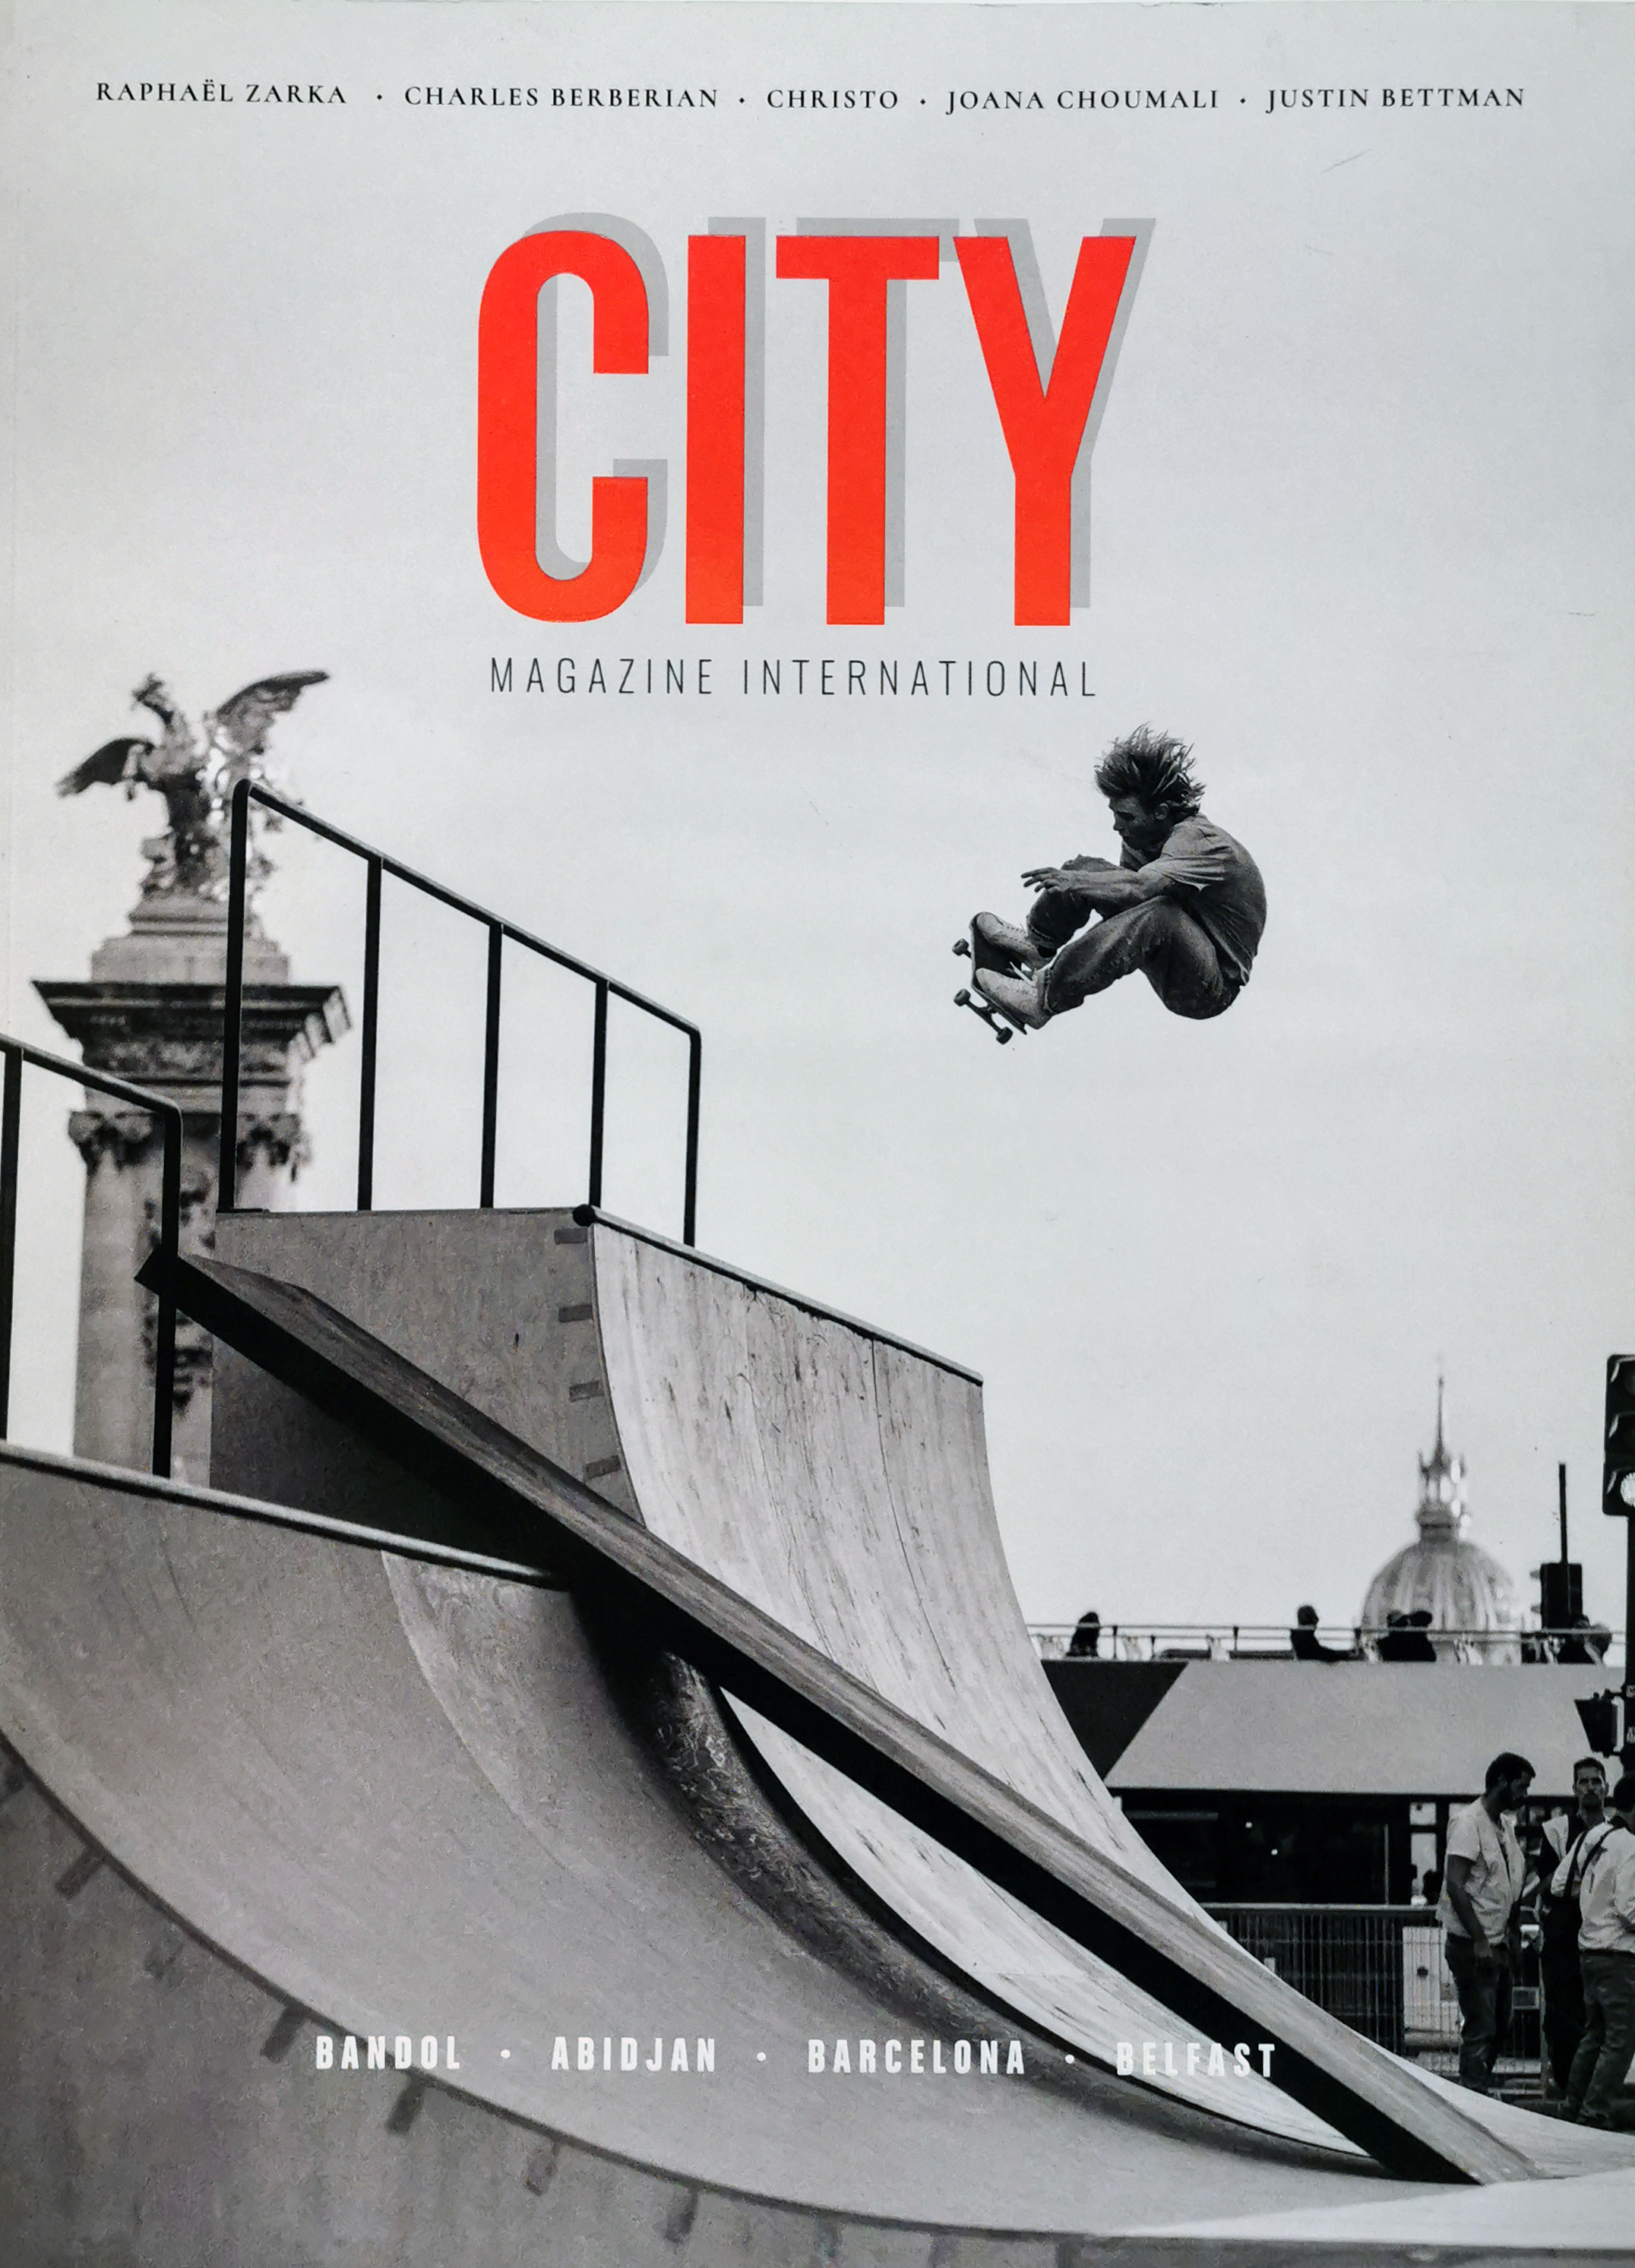 CITY Magazine International